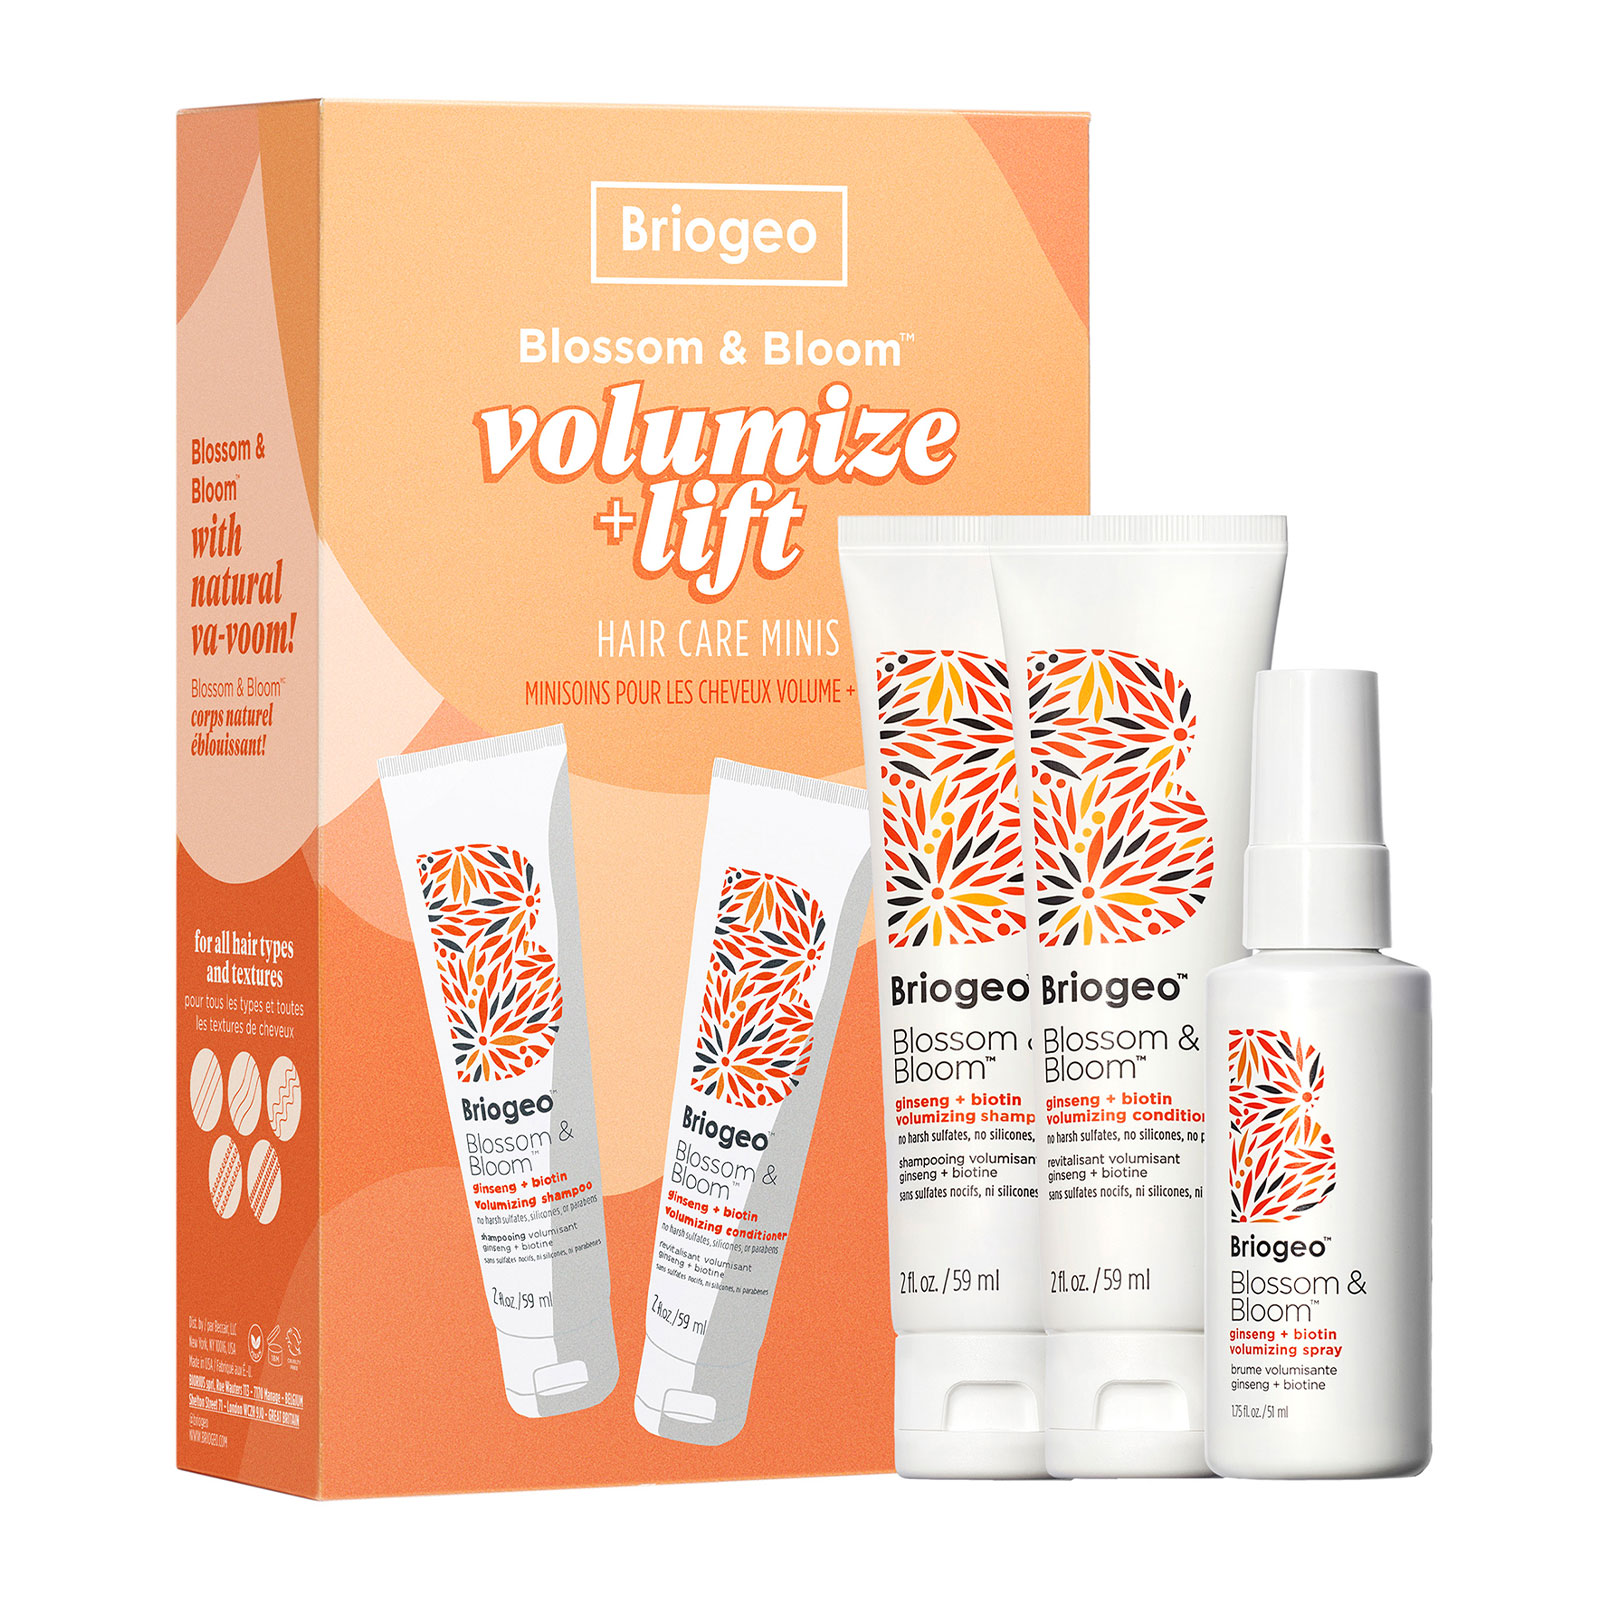 Briogeo Blossom & Bloom Volumize + Lift Hair Care Travel Kit